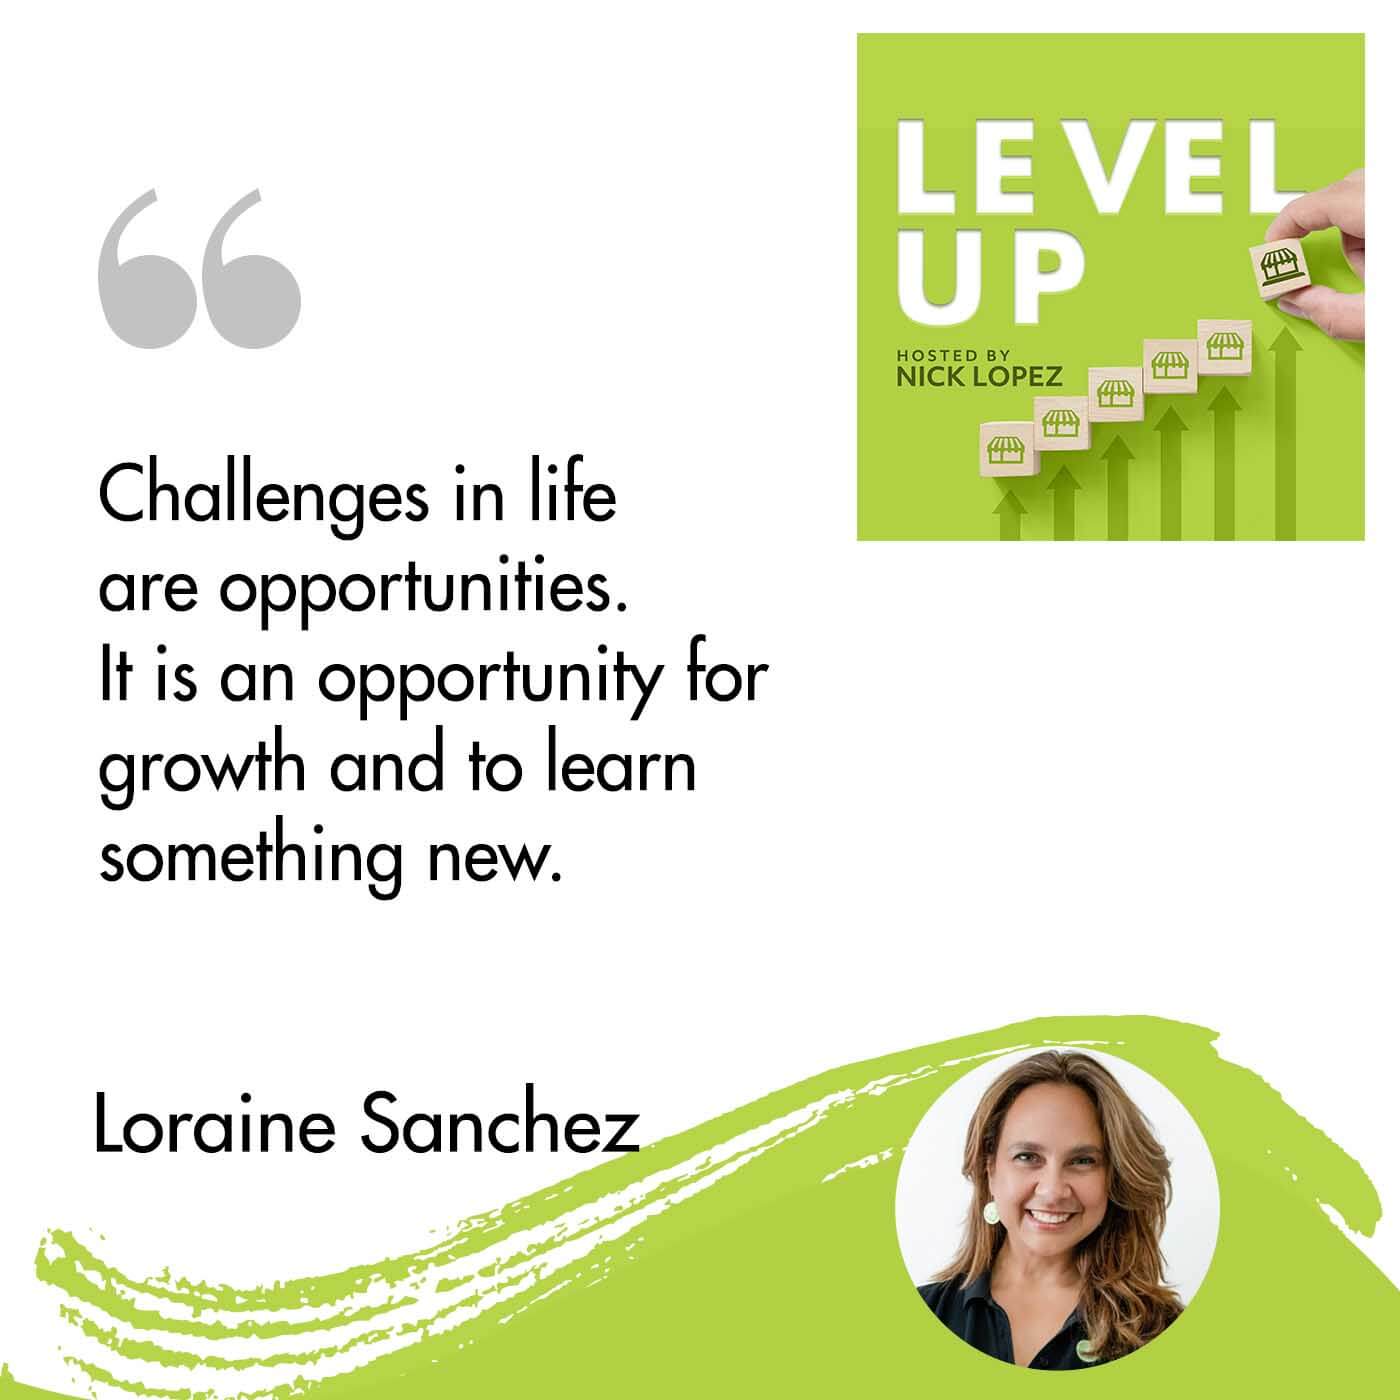 Level Up with Nick Lopez | Loraine Sanchez | LIME Painting